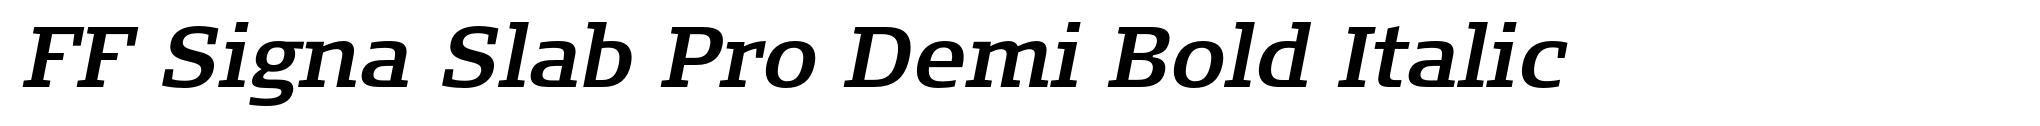 FF Signa Slab Pro Demi Bold Italic image